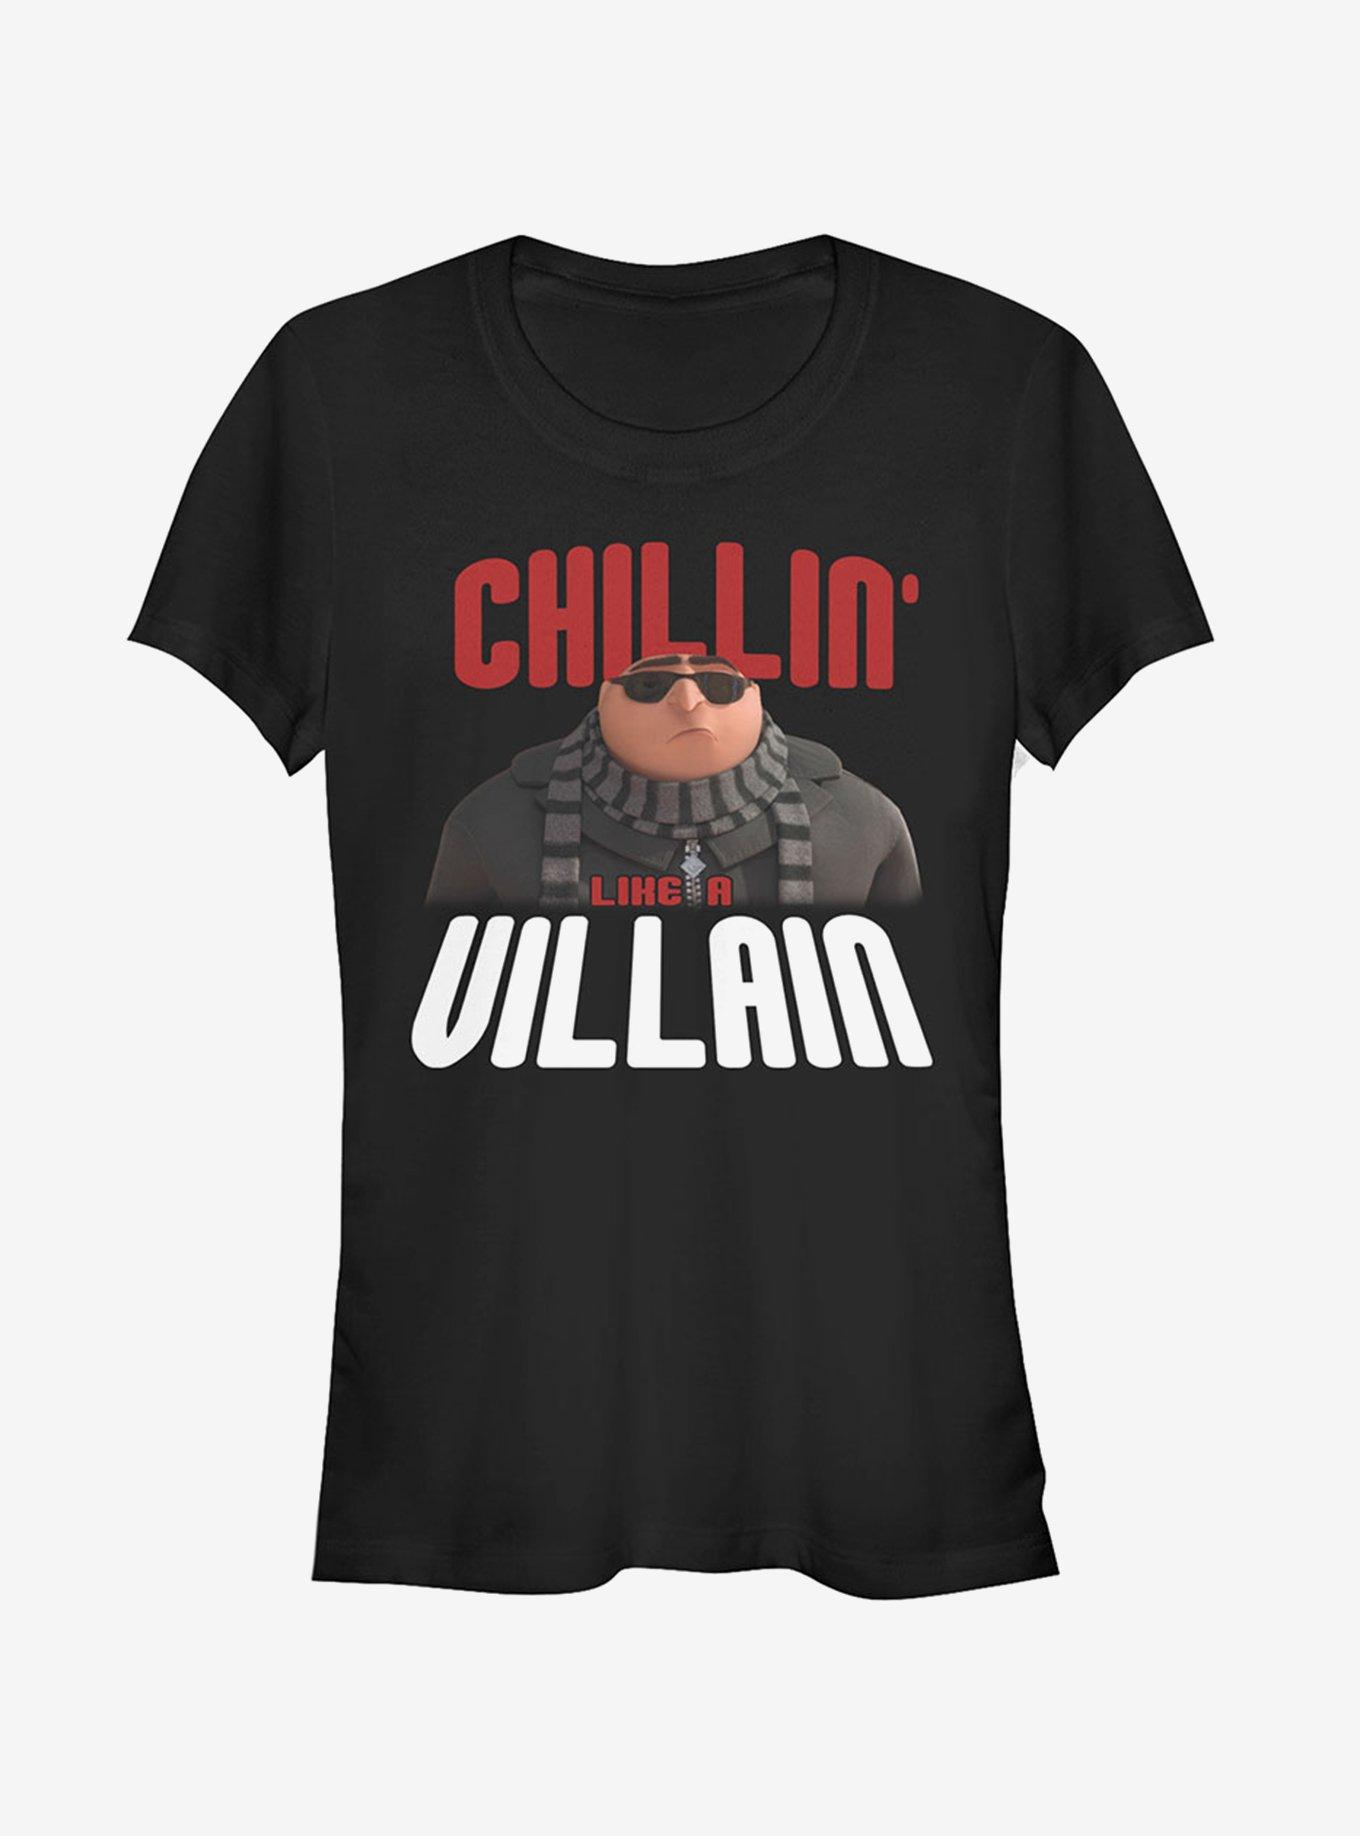 Gru Chillin' Like a Villain Girls T-Shirt, BLACK, hi-res